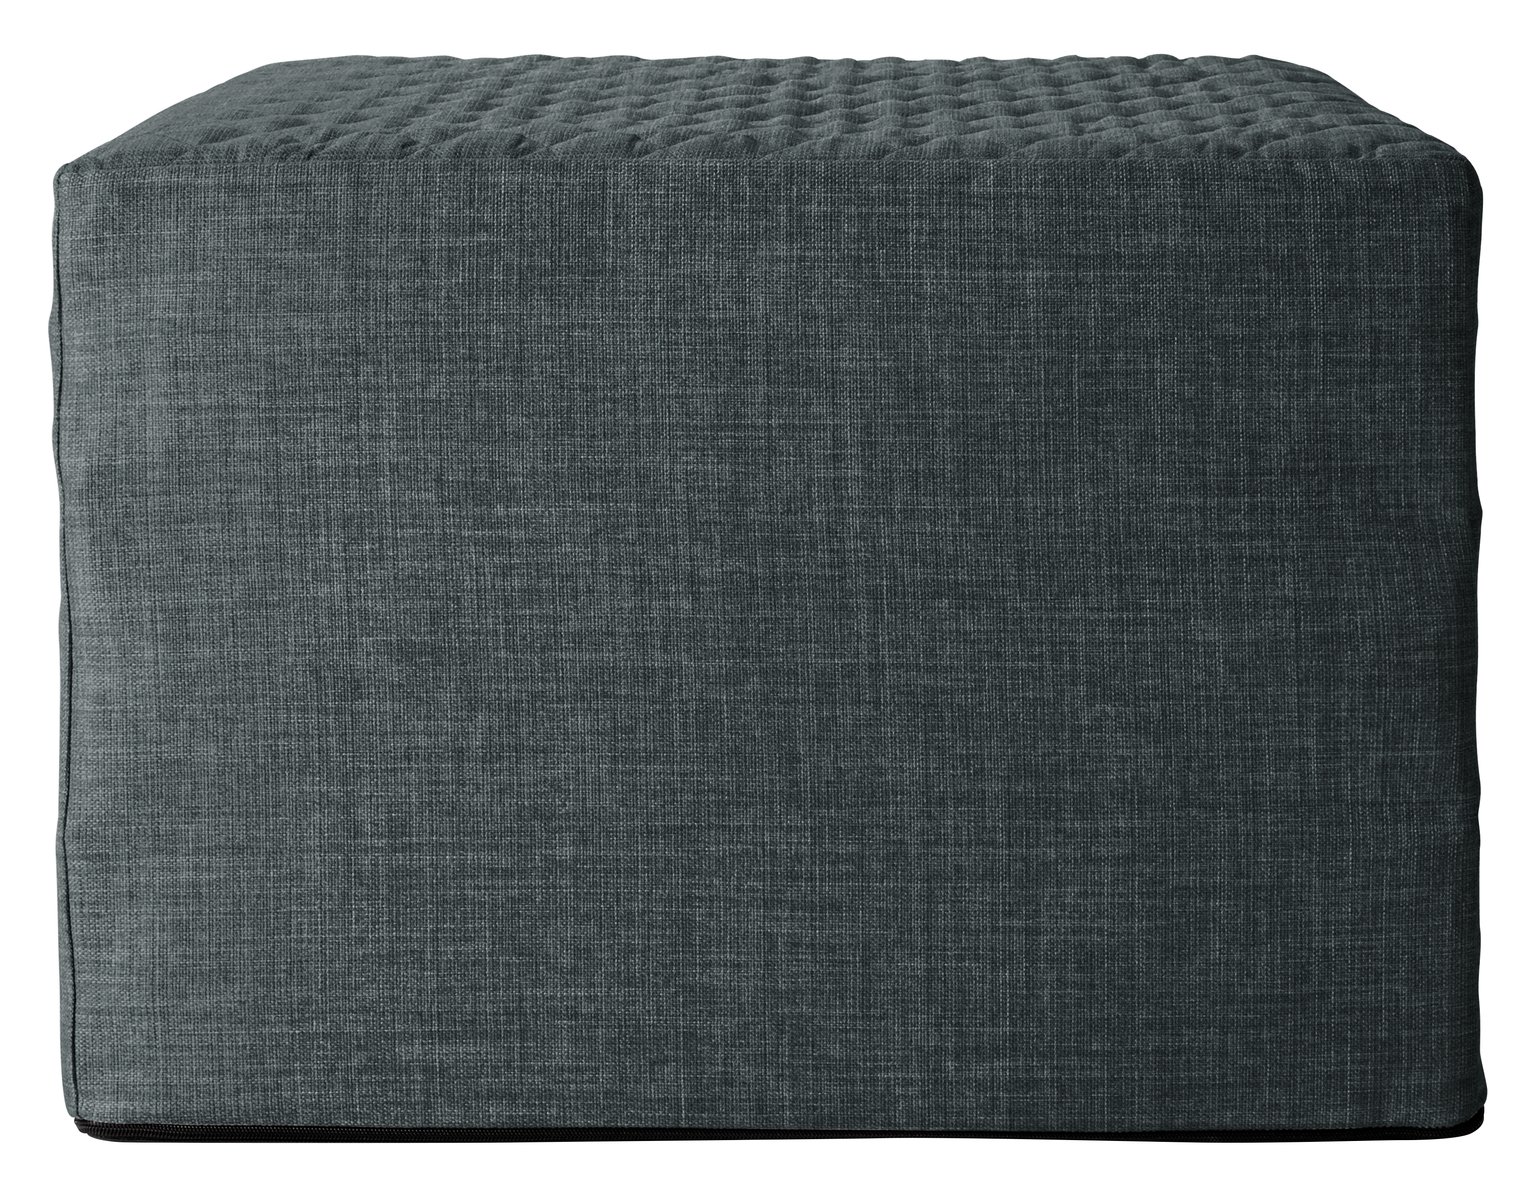 Argos Home Prim Single Fabric Sofa Bed - Charcoal